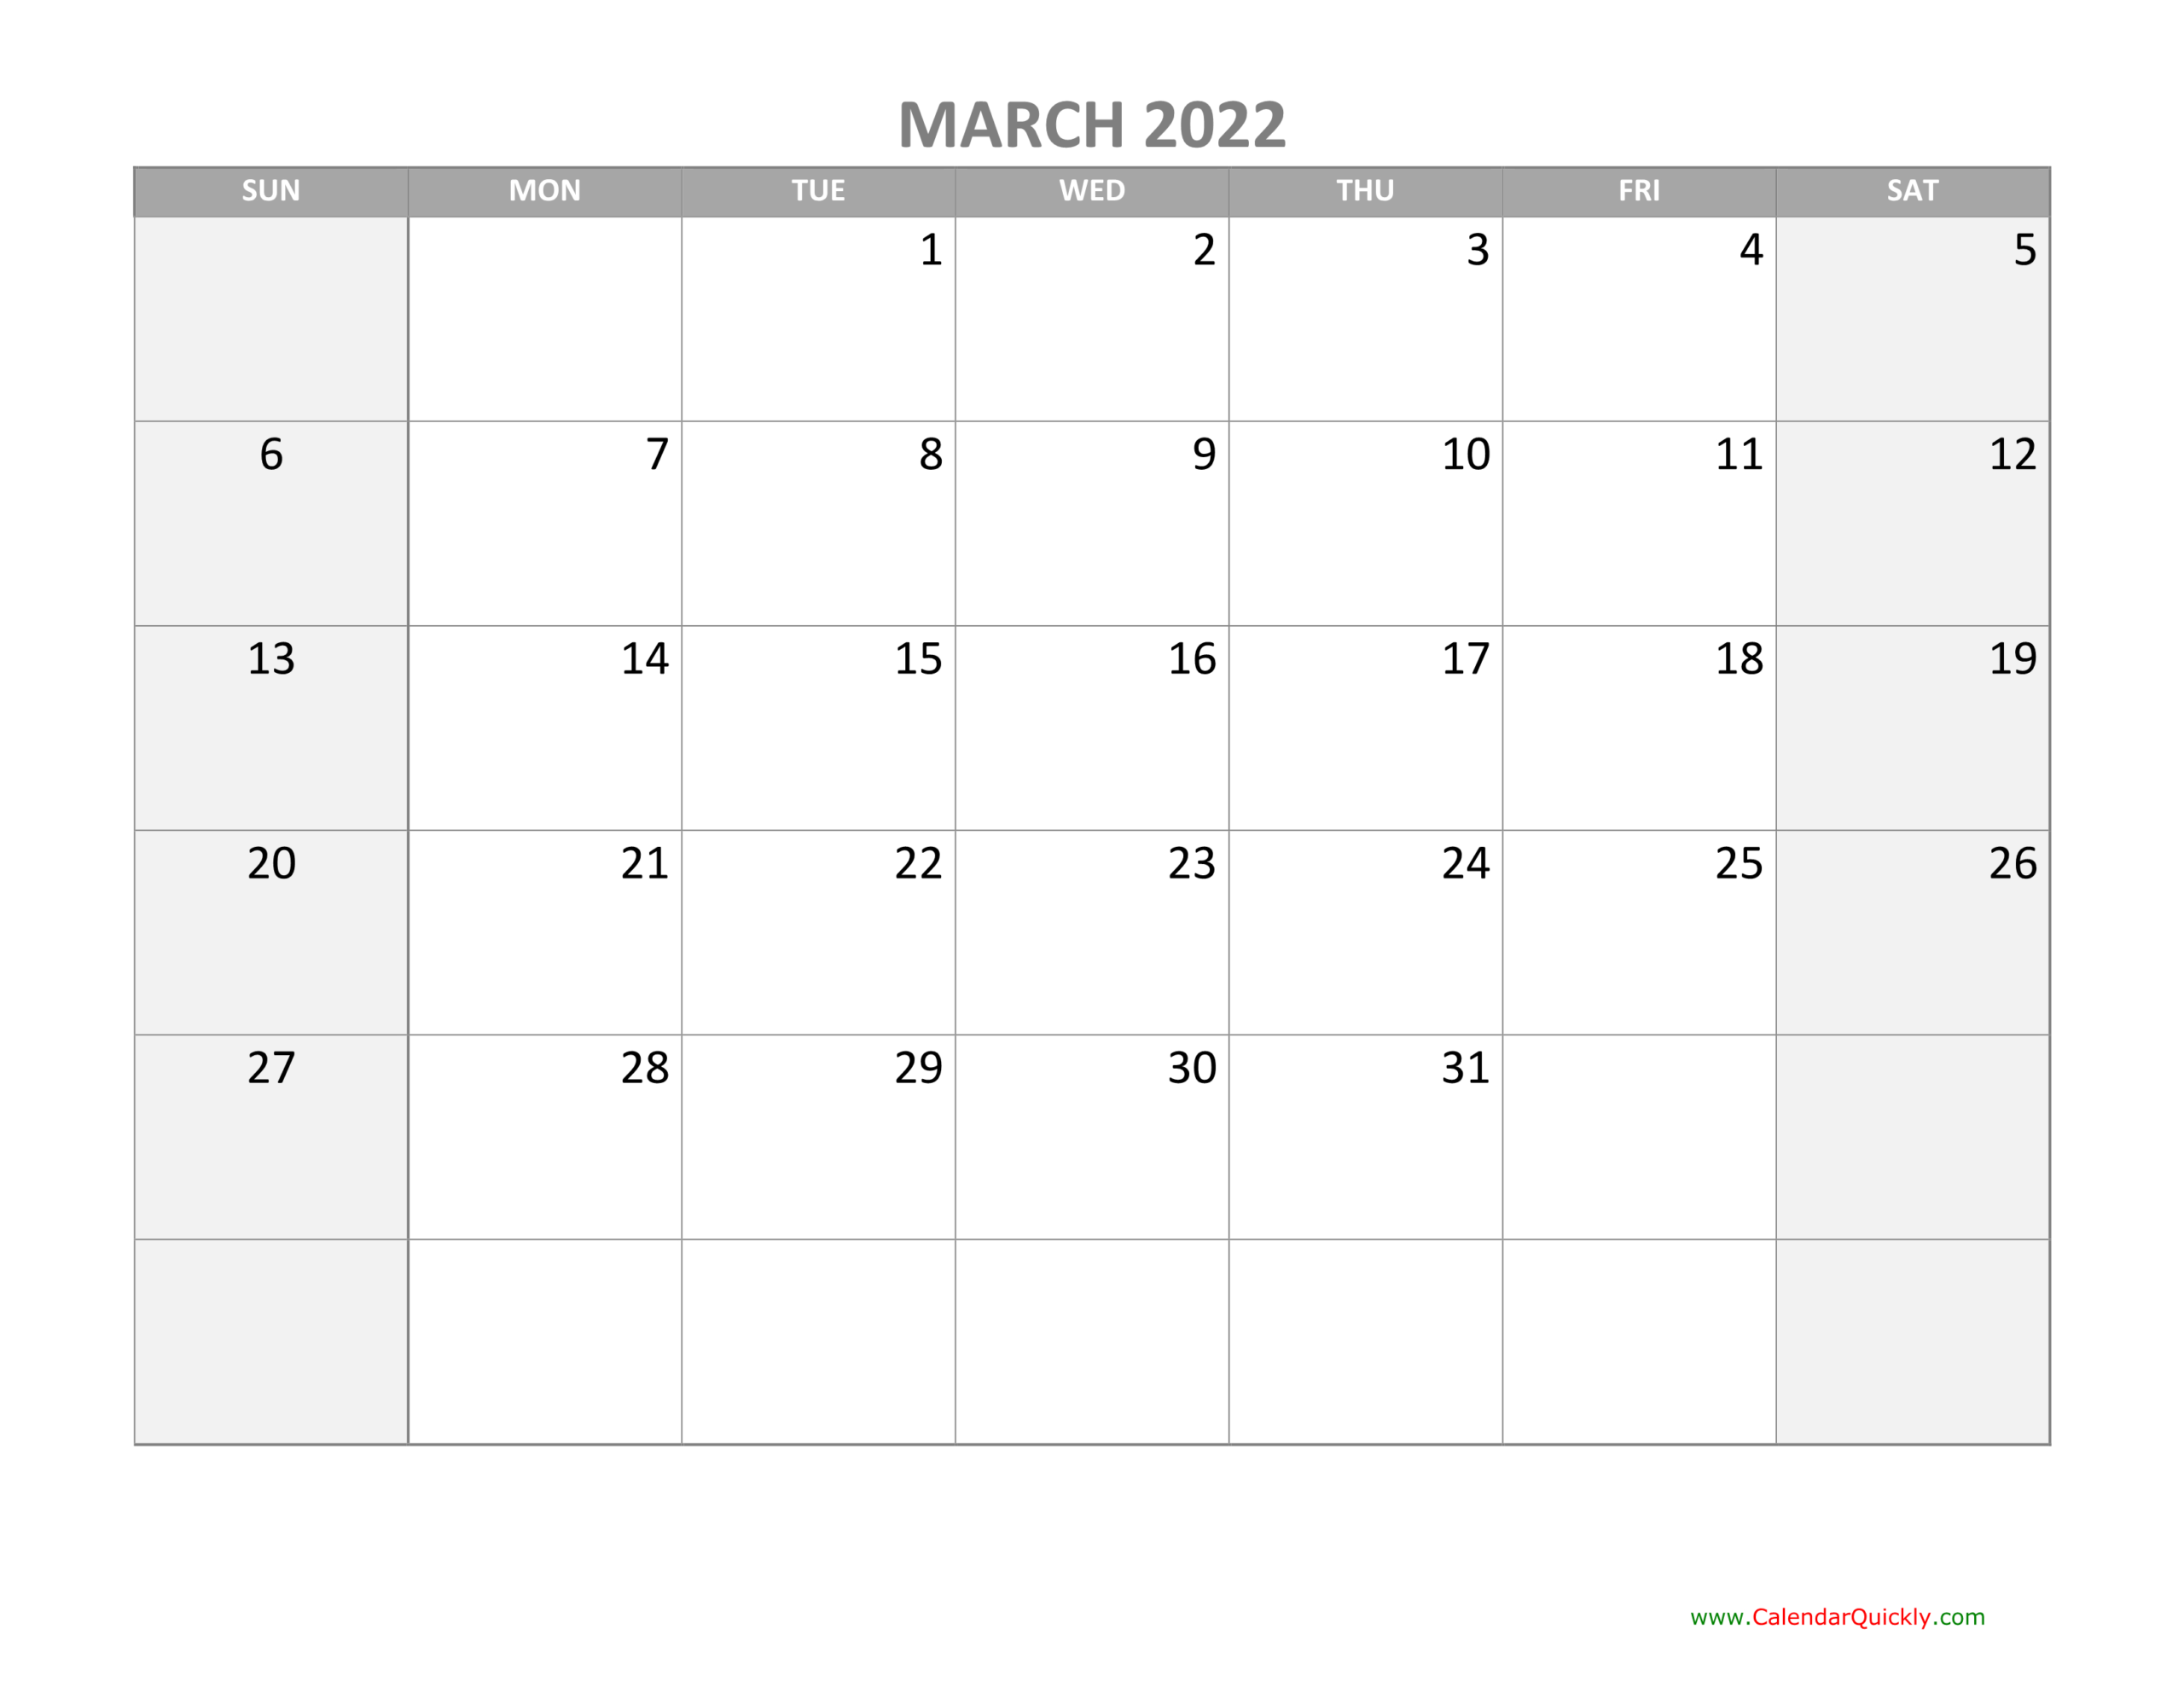 March Calendar 2022 With Holidays | Calendar Quickly  April 2022 To March 2022 Calendar